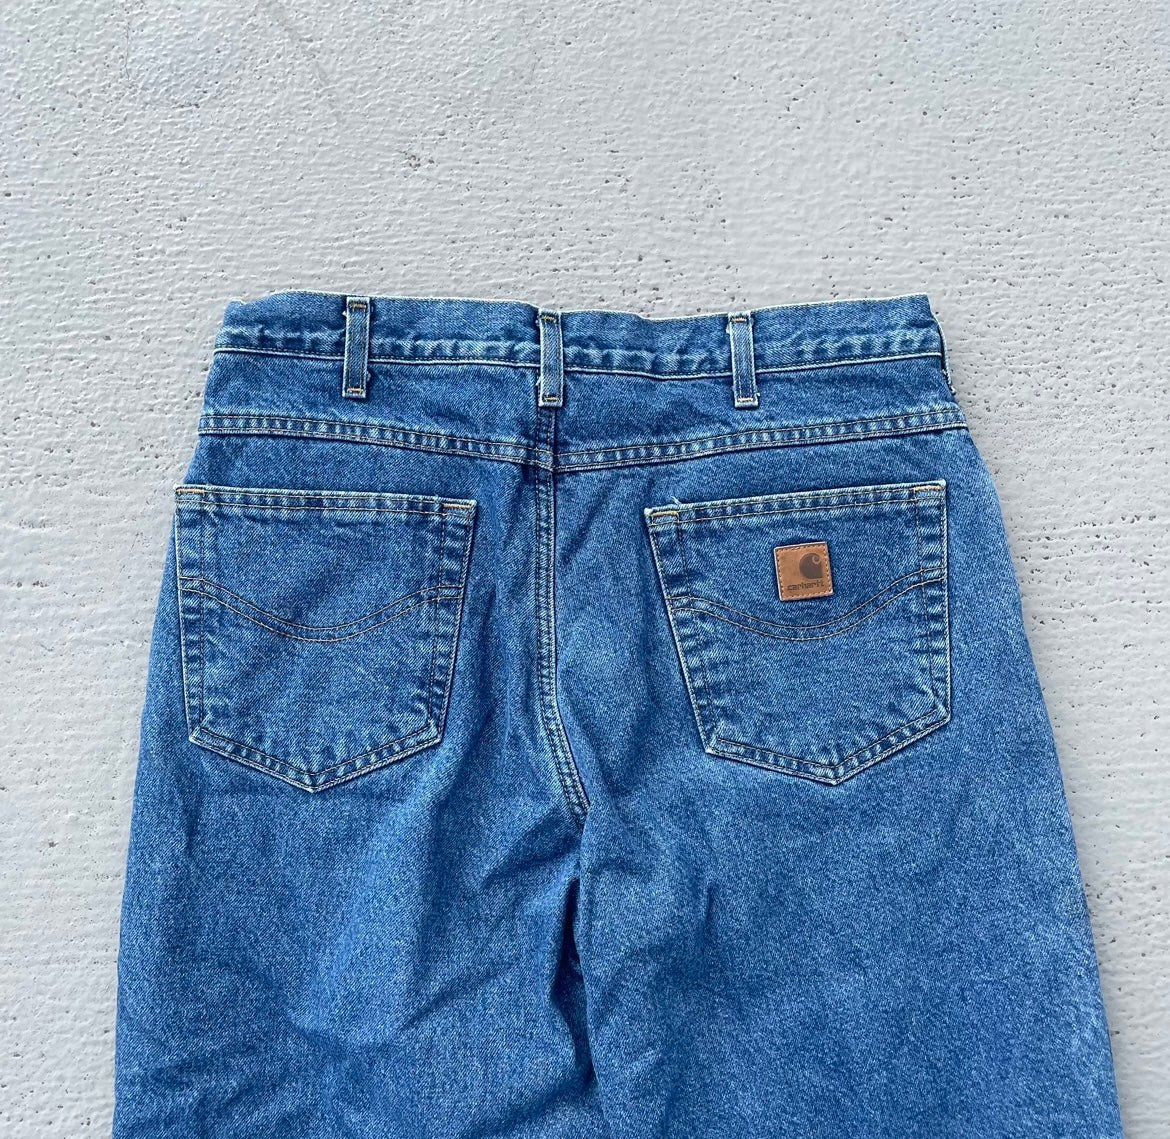 Carhartt jeansbyxor Stl 34/30